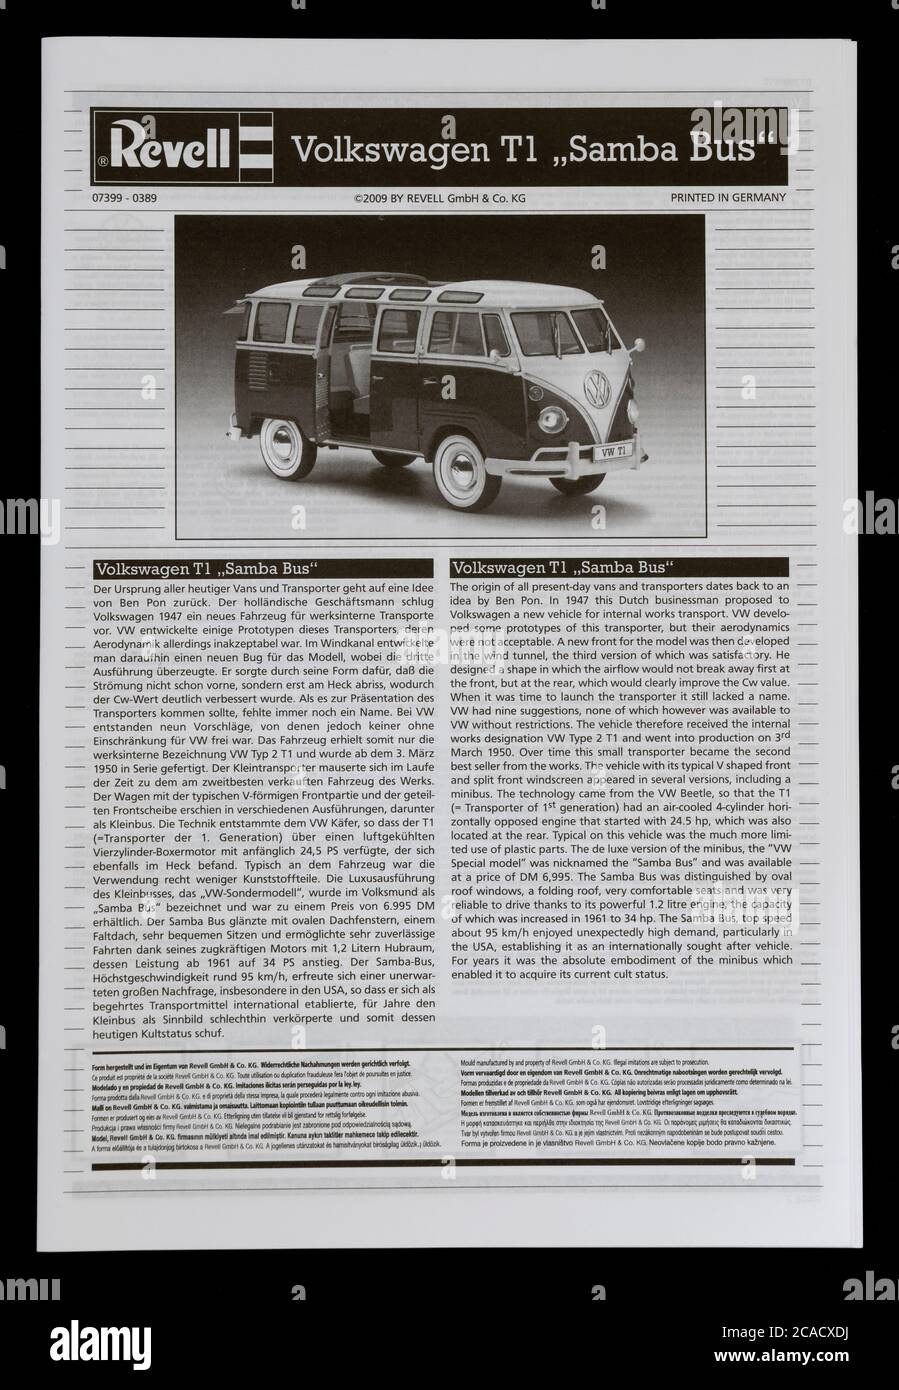 Revell Car Maqueta Volkswagen T1 Samba Bus, Kit Modelo, Escala 1